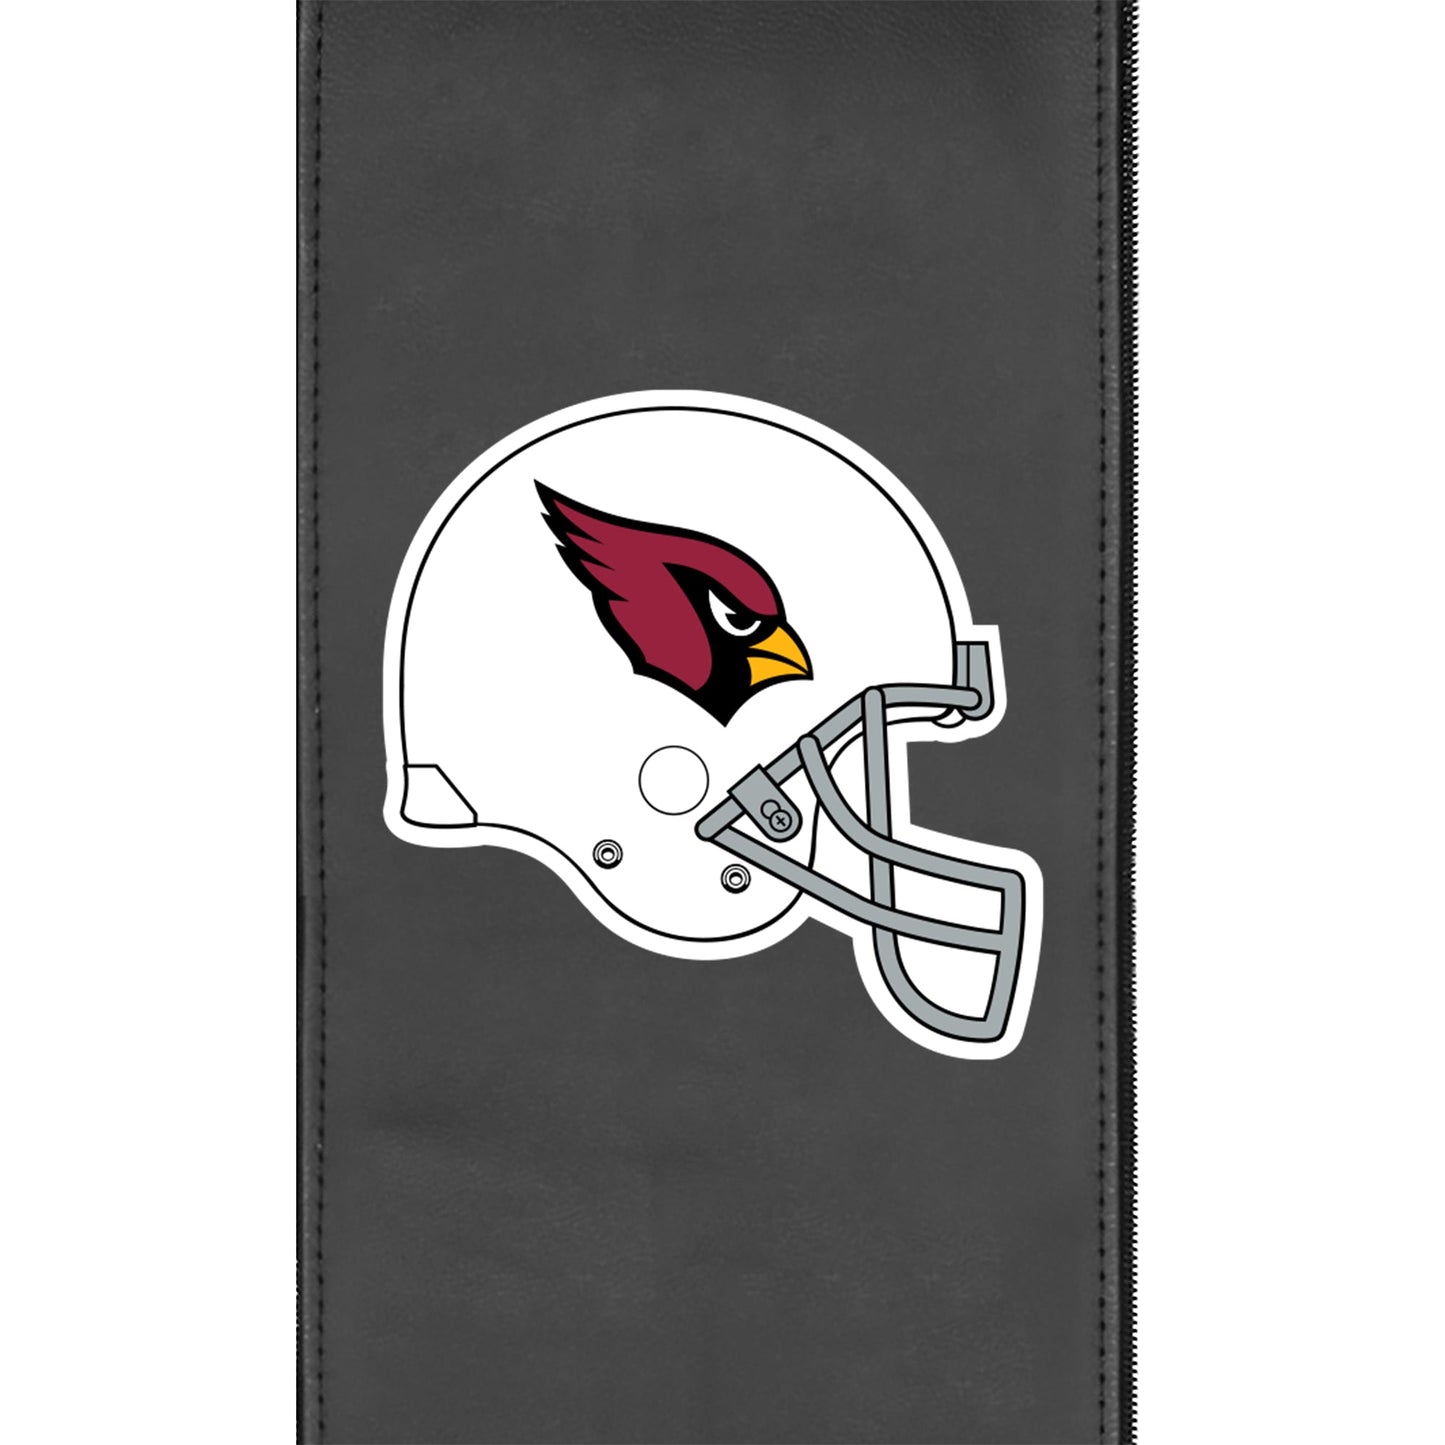 Silver Club Chair with Arizona Cardinals Helmet Logo